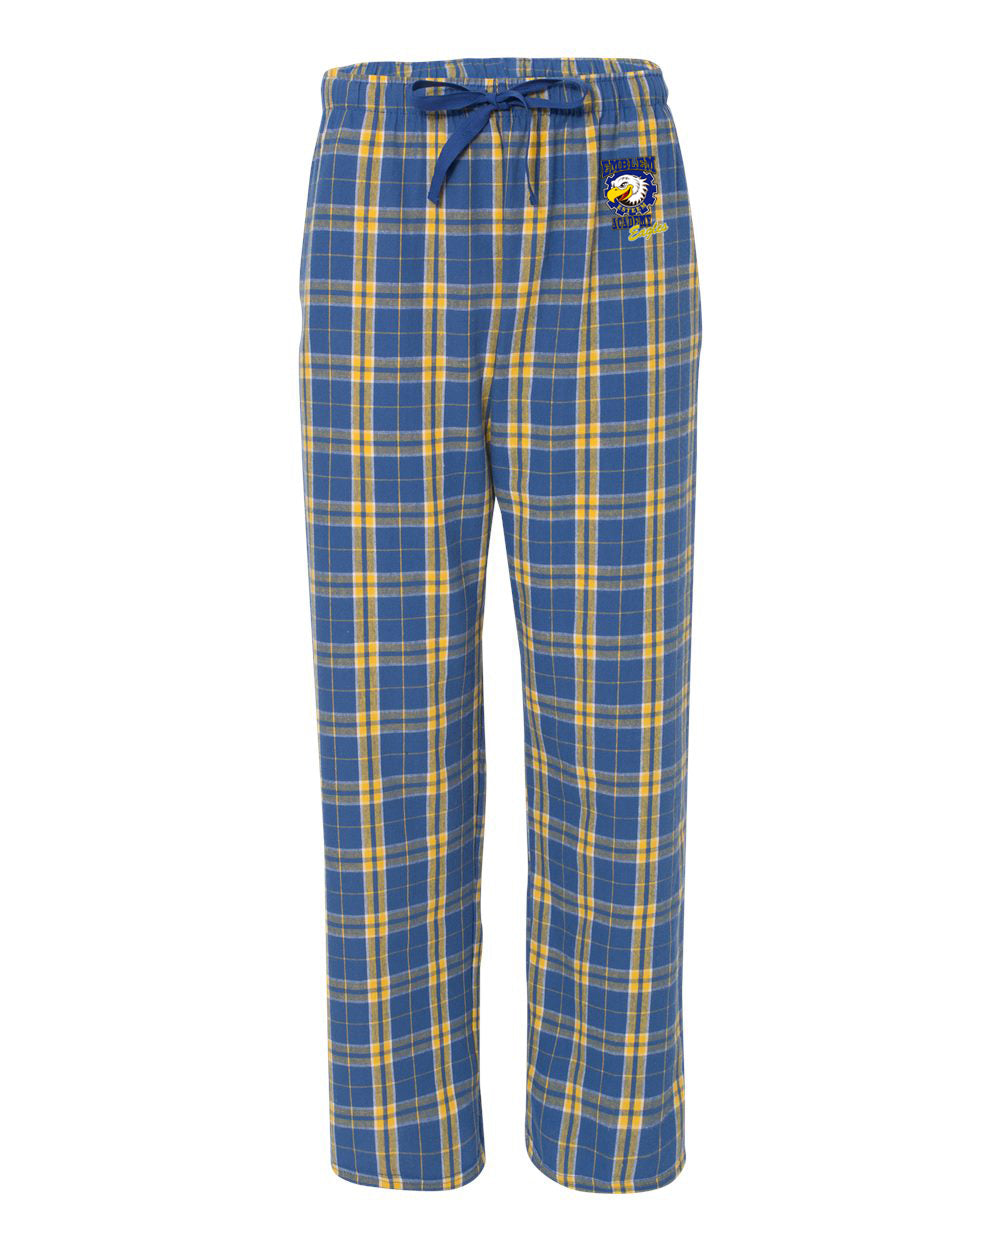 Flannel Pants - ADULT sizes - GLITTER LOGO